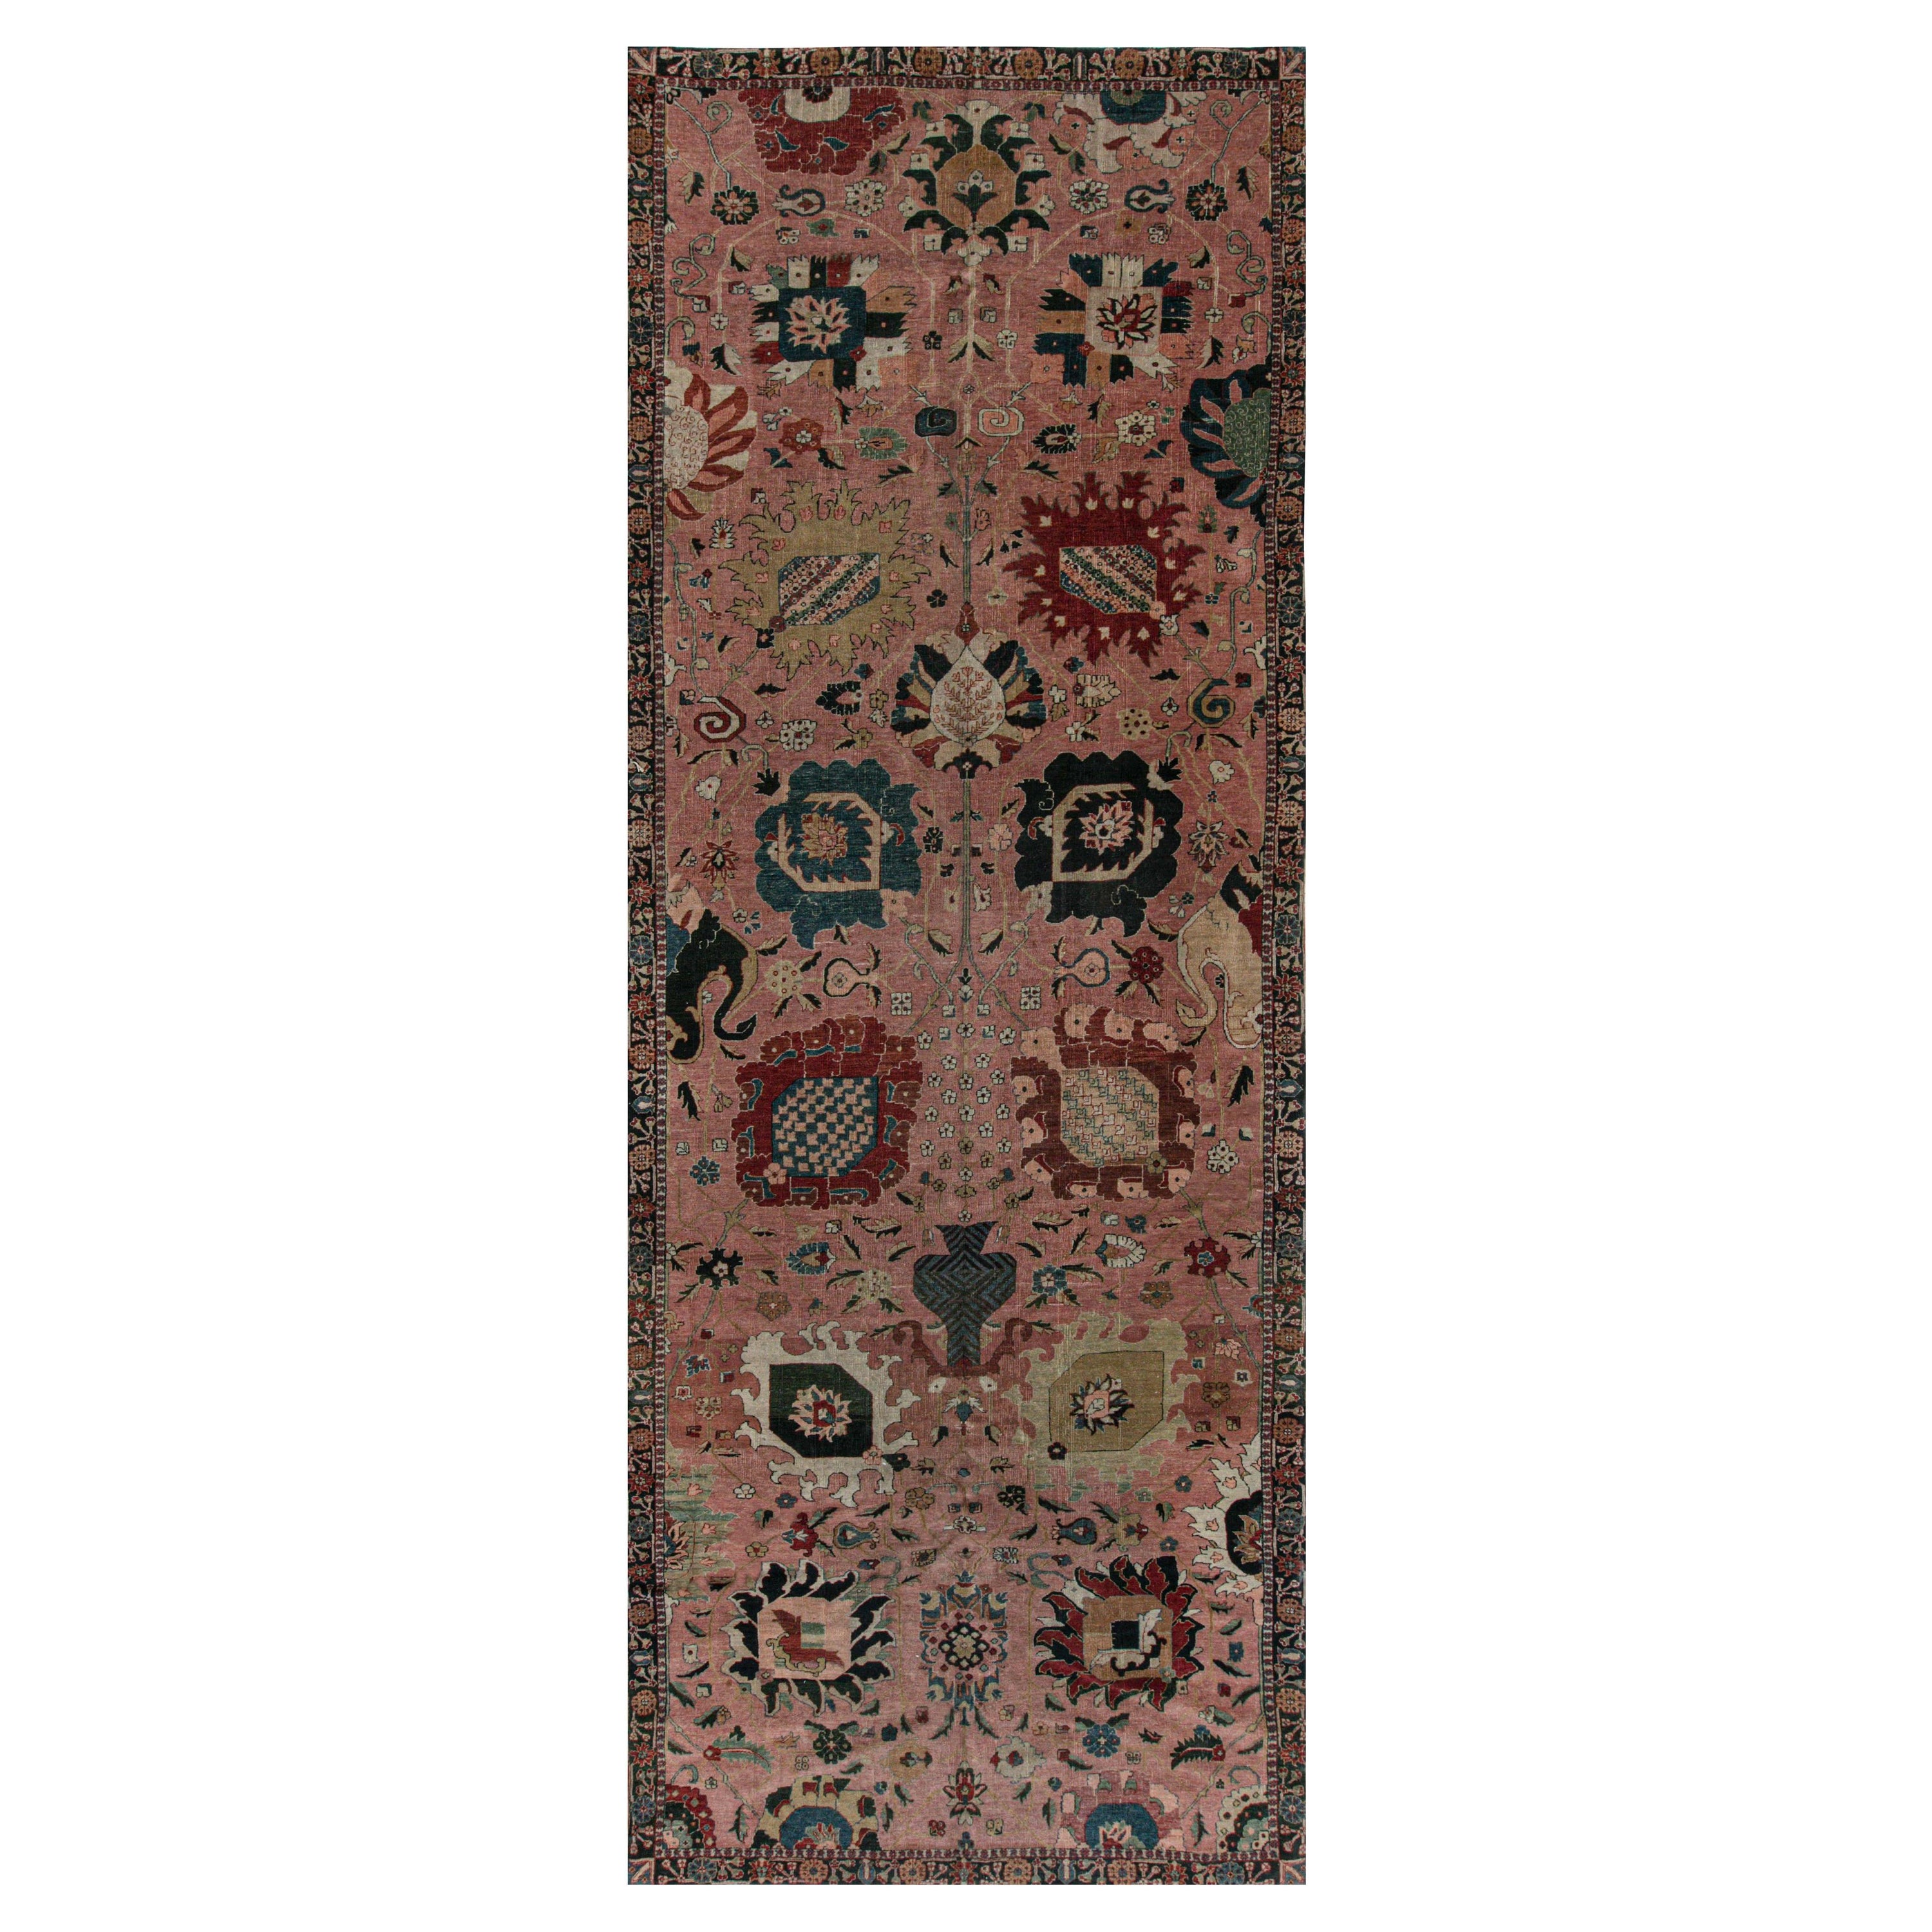 Authentic Persian Tabriz Botanic Carpet